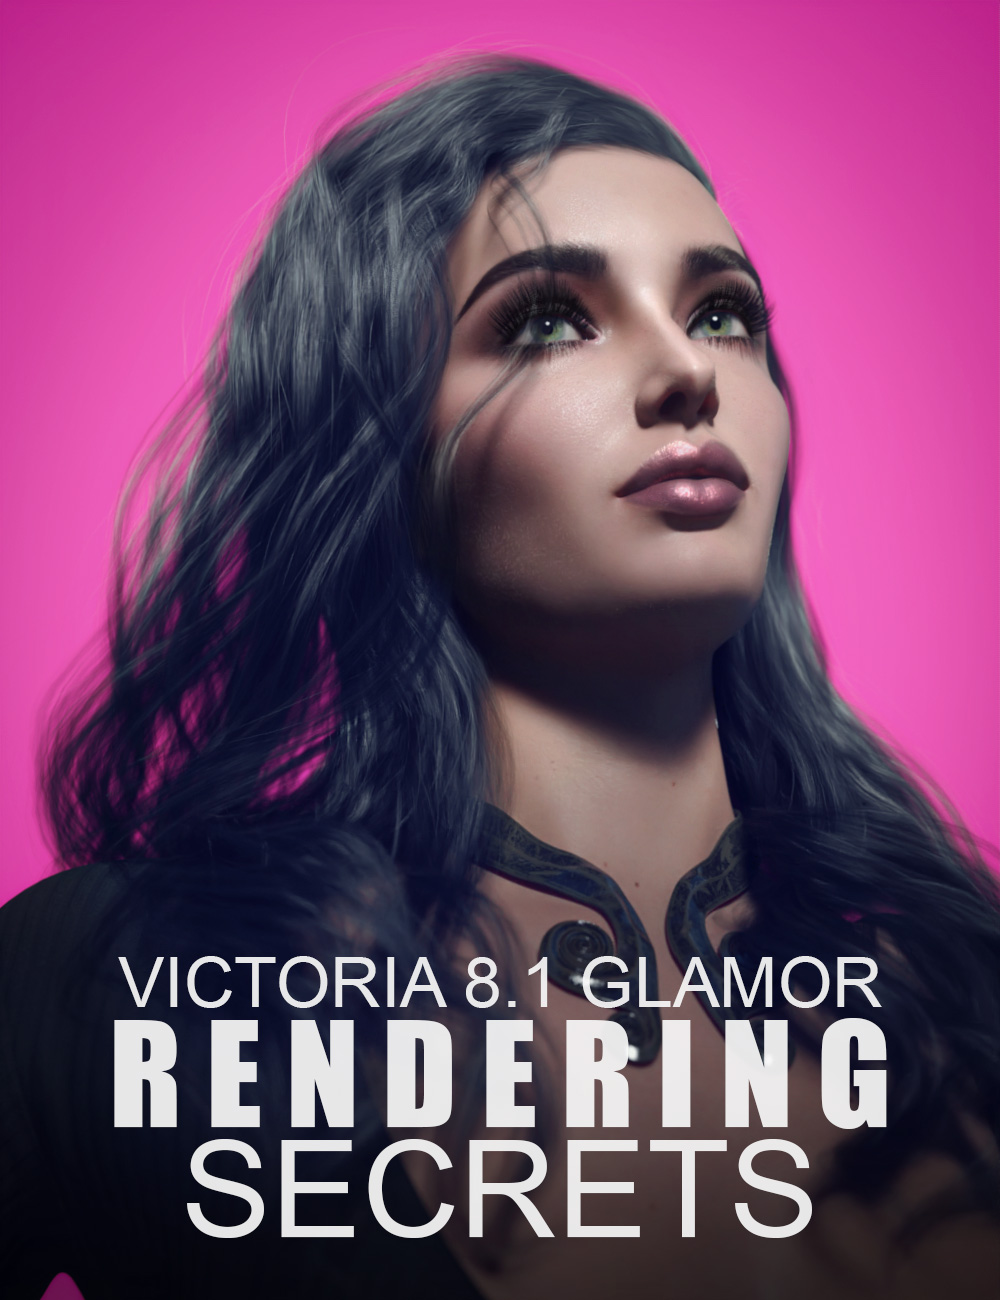 Victoria 8.1 Glamor Rendering Secrets - Video Tutorial by: Dreamlight, 3D Models by Daz 3D